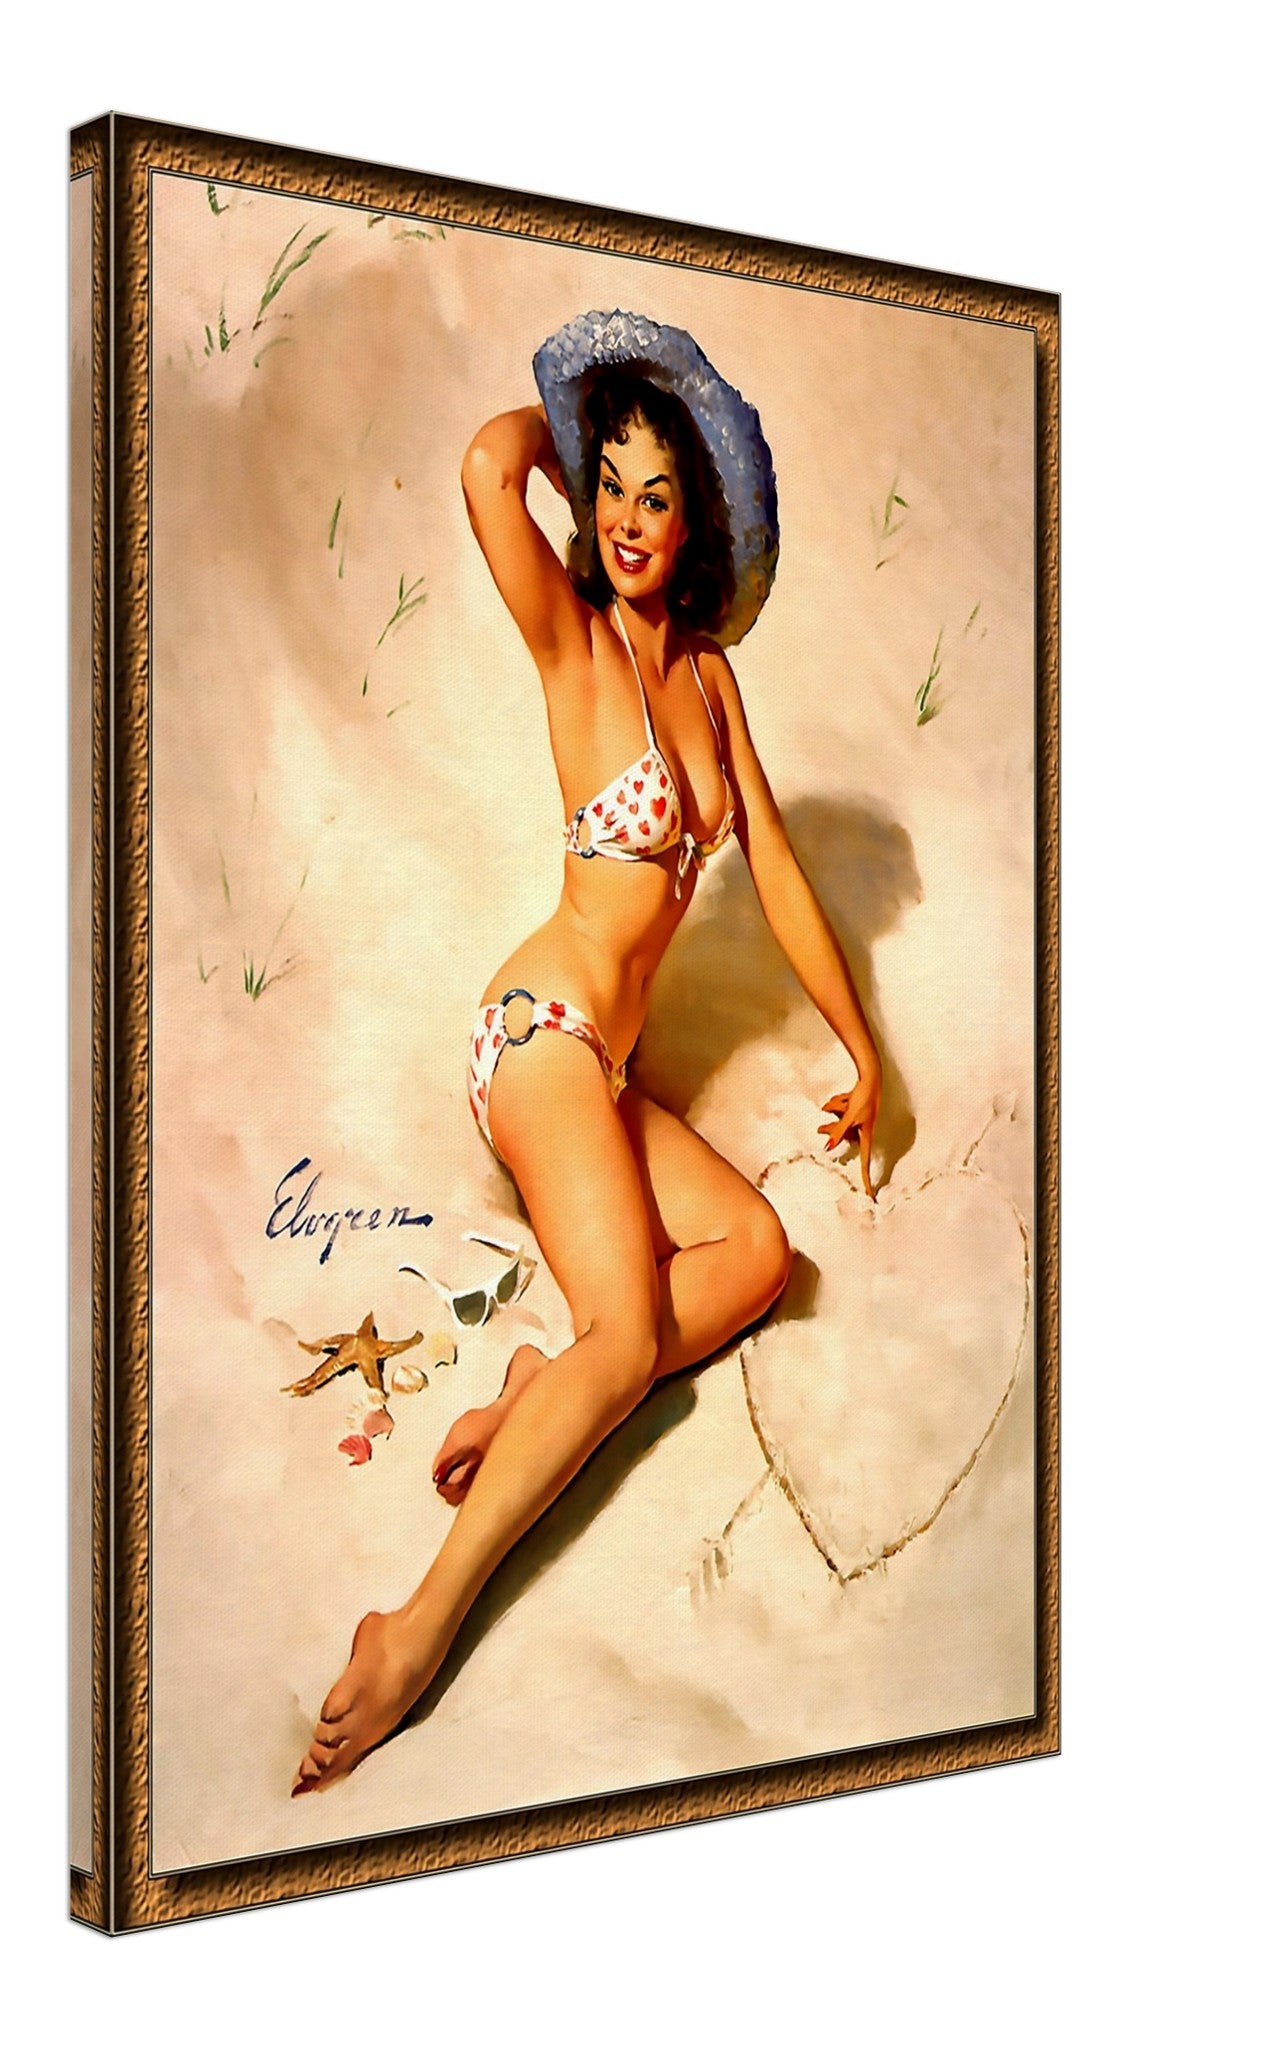 Vintage Pin Up Girl Canvas Print, Bikini With Hearts, Gil Elvgren - Vintage Art - Retro Pin Up Girl Canvas - Late 1940's - 1950's - WallArtPrints4U